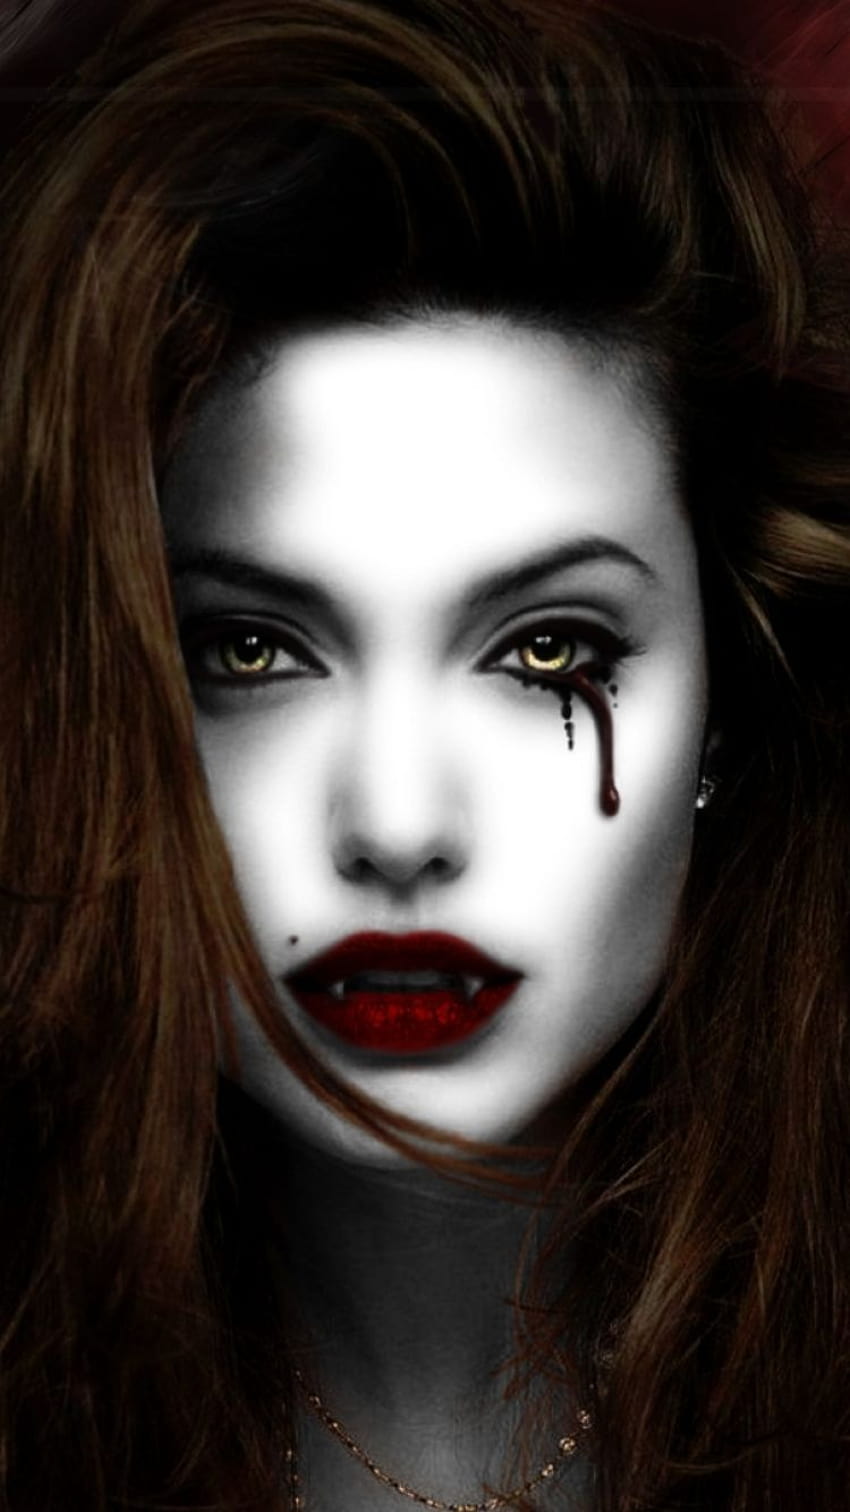 Arriba 57+ images fondos de pantalla de chica vampiro - Viaterra.mx